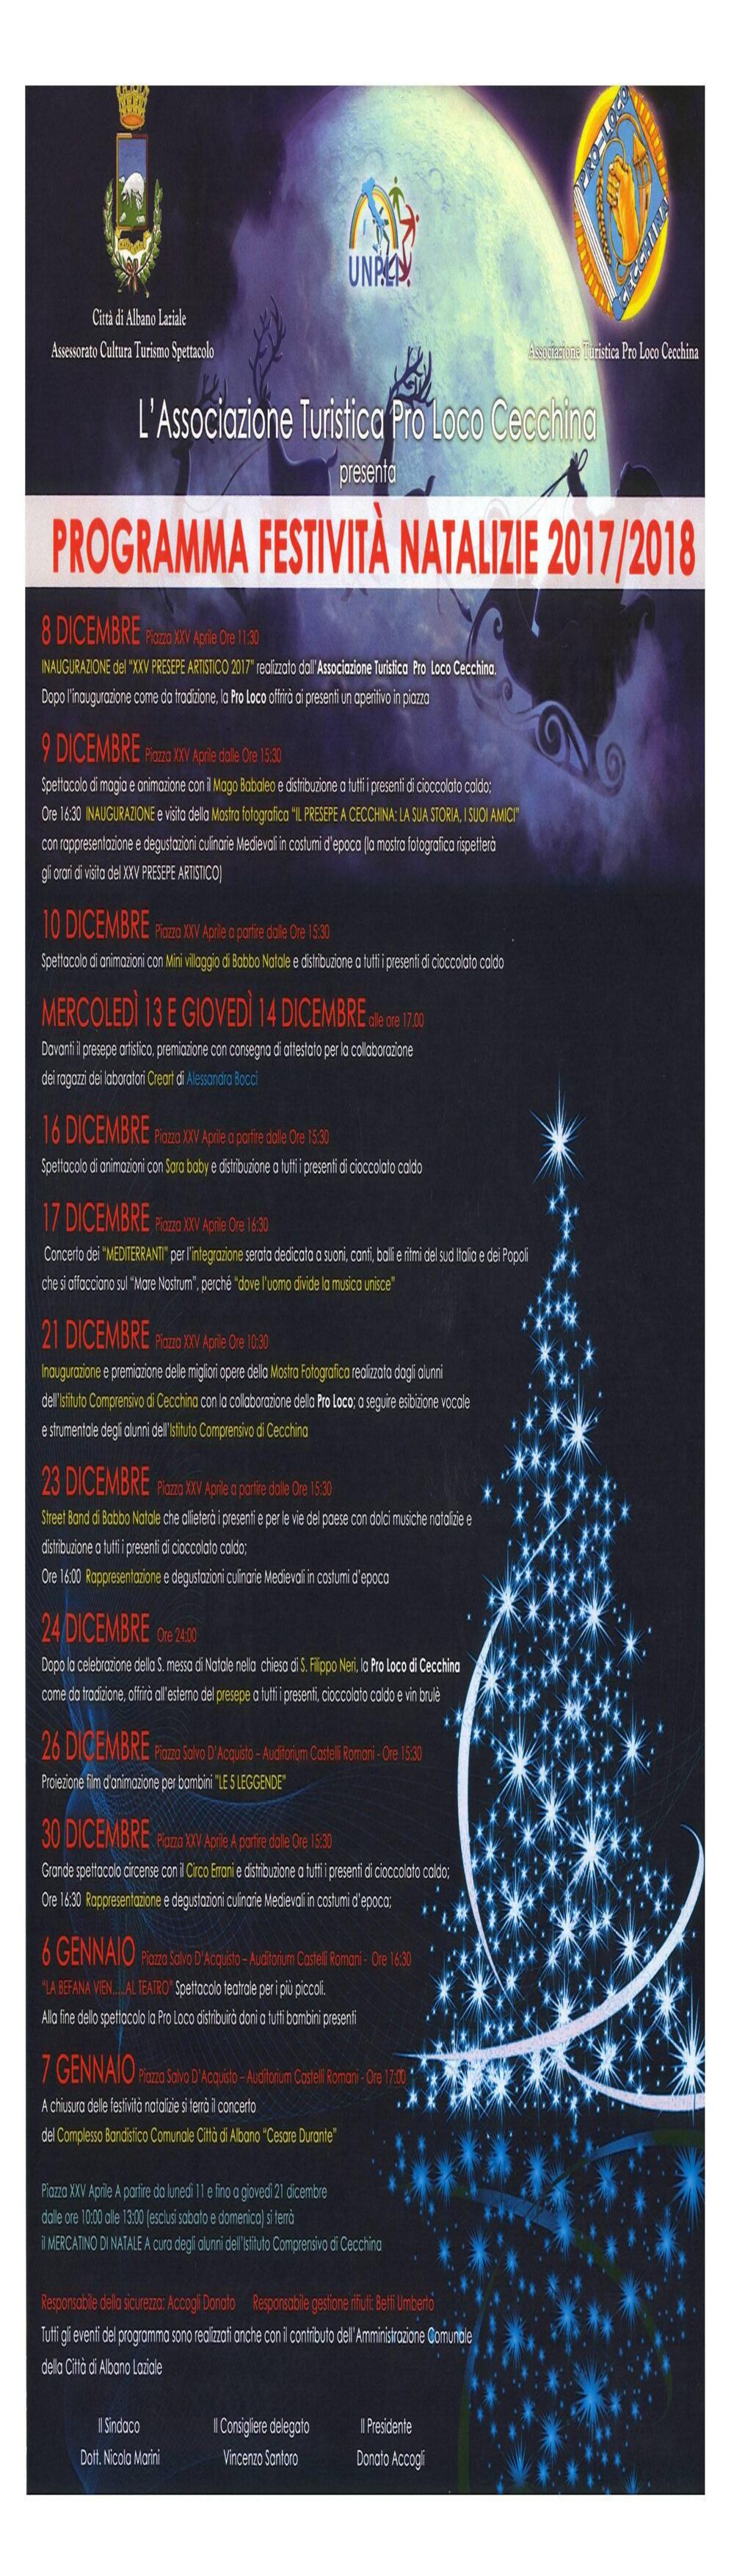 Locandina Festività natalizie 2017/2018 - Cecchina